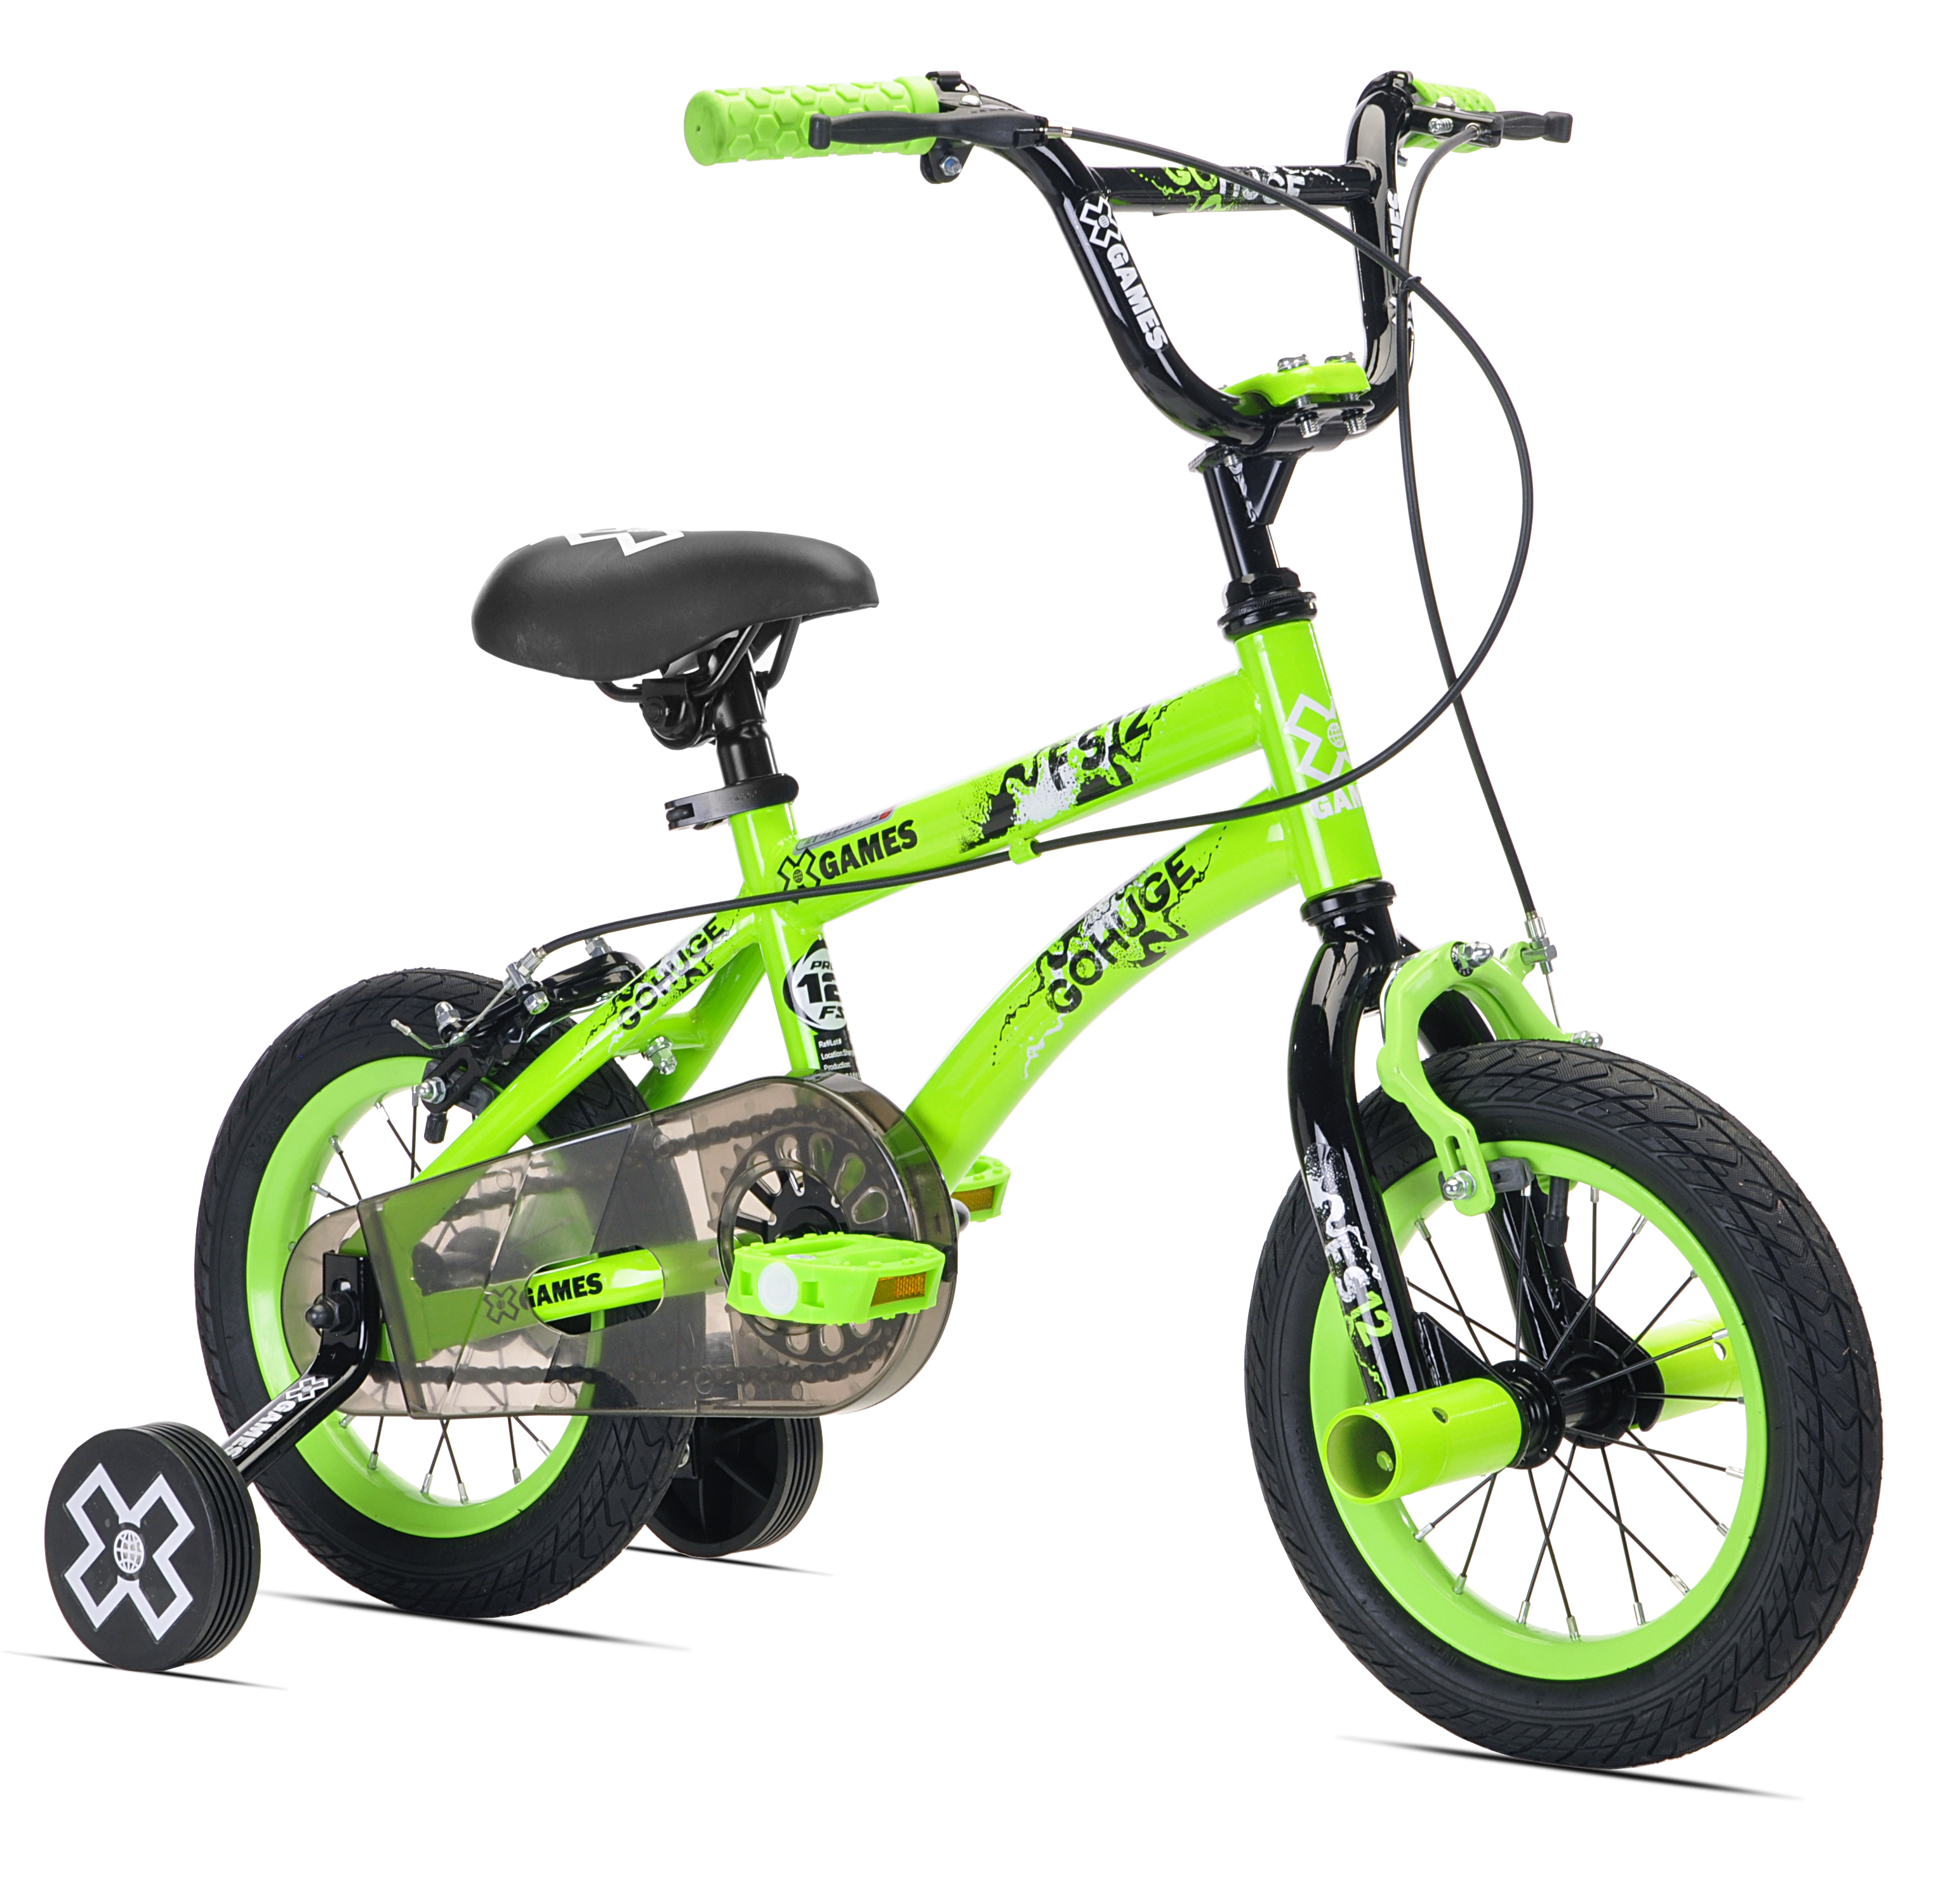 X-Games 12" BMX Boy's Bike, Green - image 1 of 8